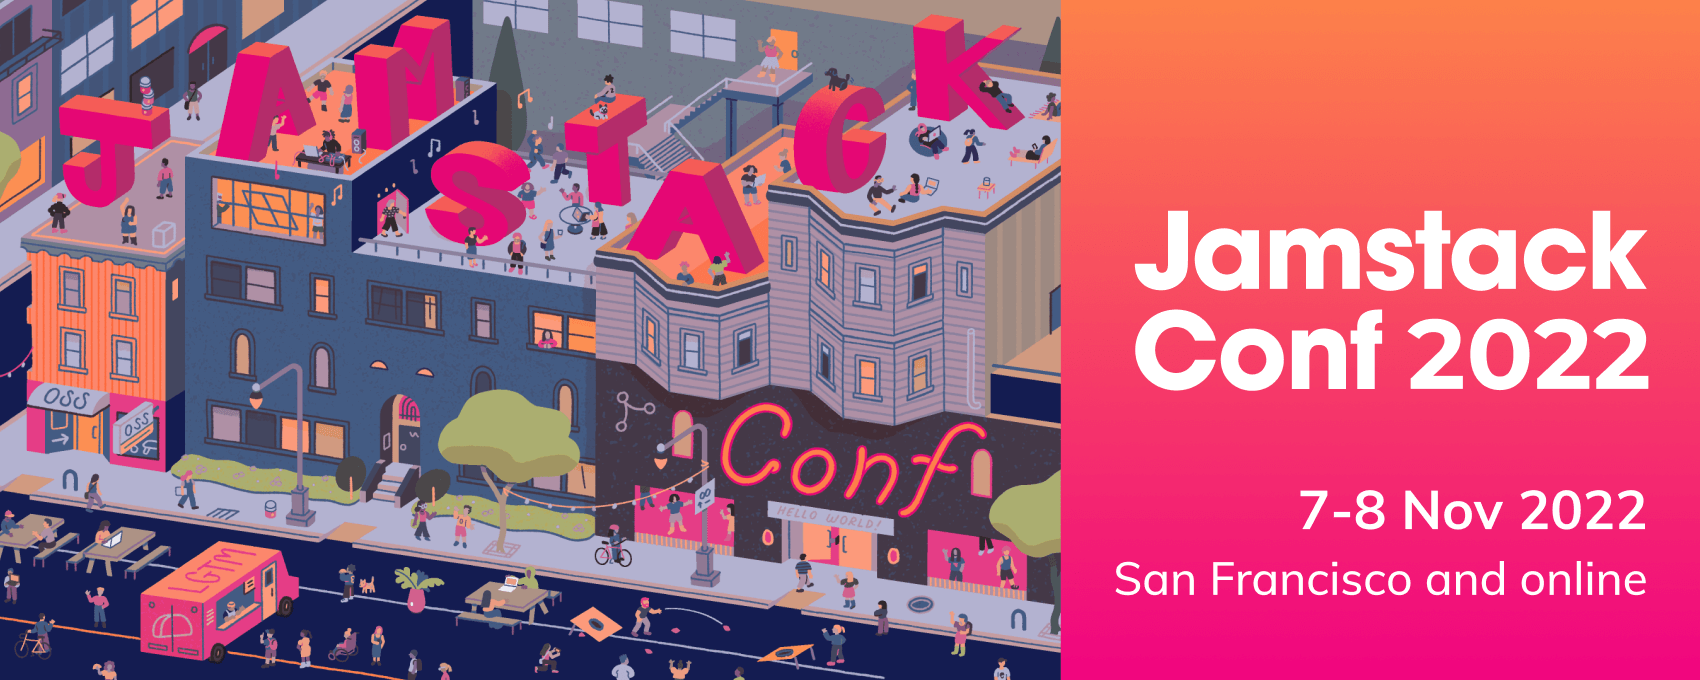 Jamstack Conf 2022, 7-8 November, San Francisco and online